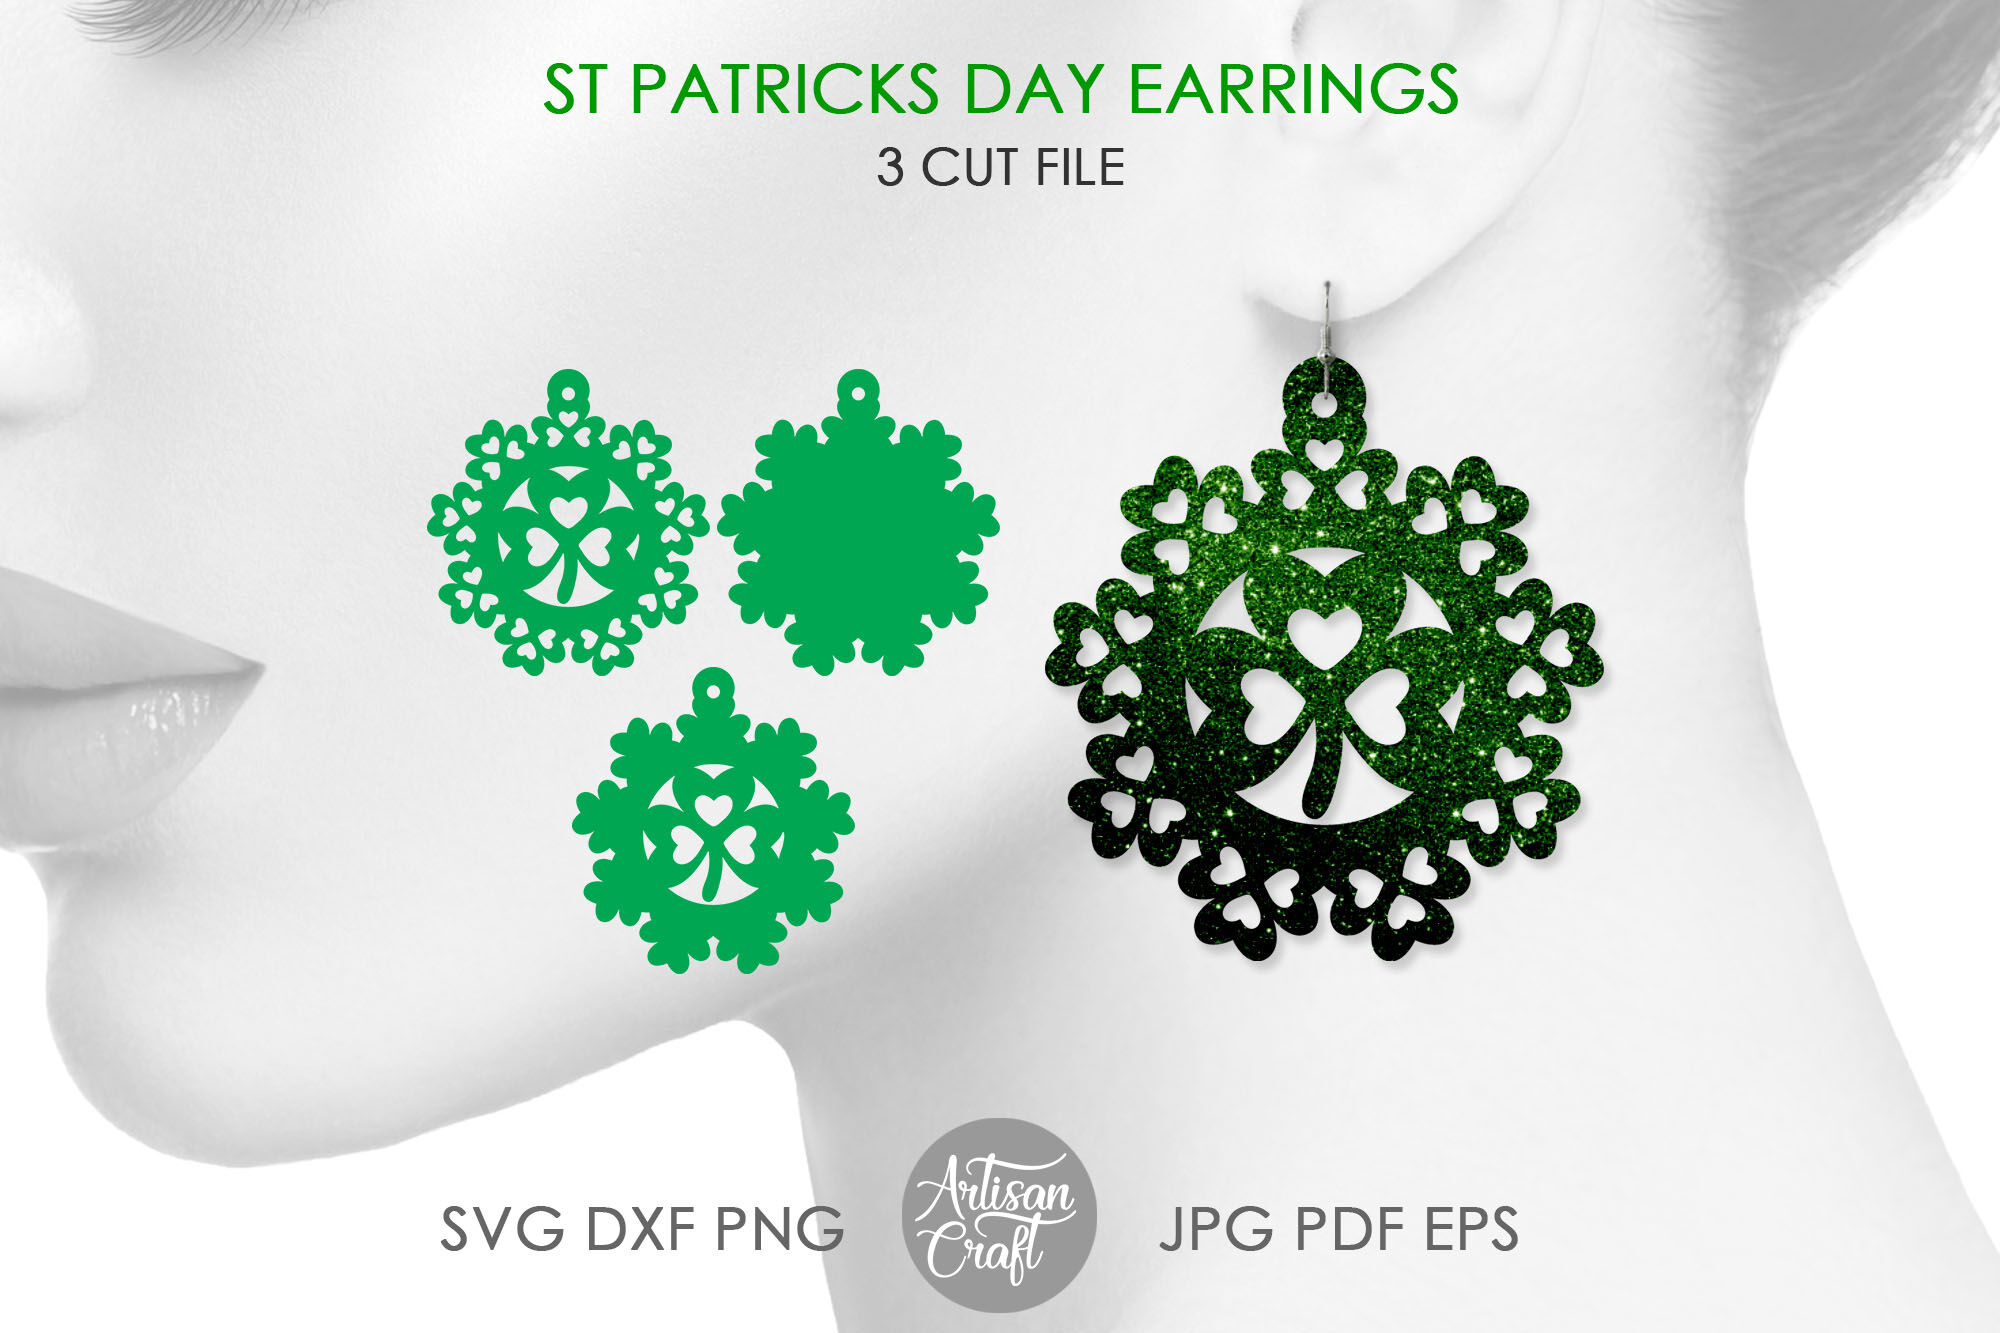 St Patrick's Day Earrings SVG/ Cut File/ Cricut/ Laser Cut